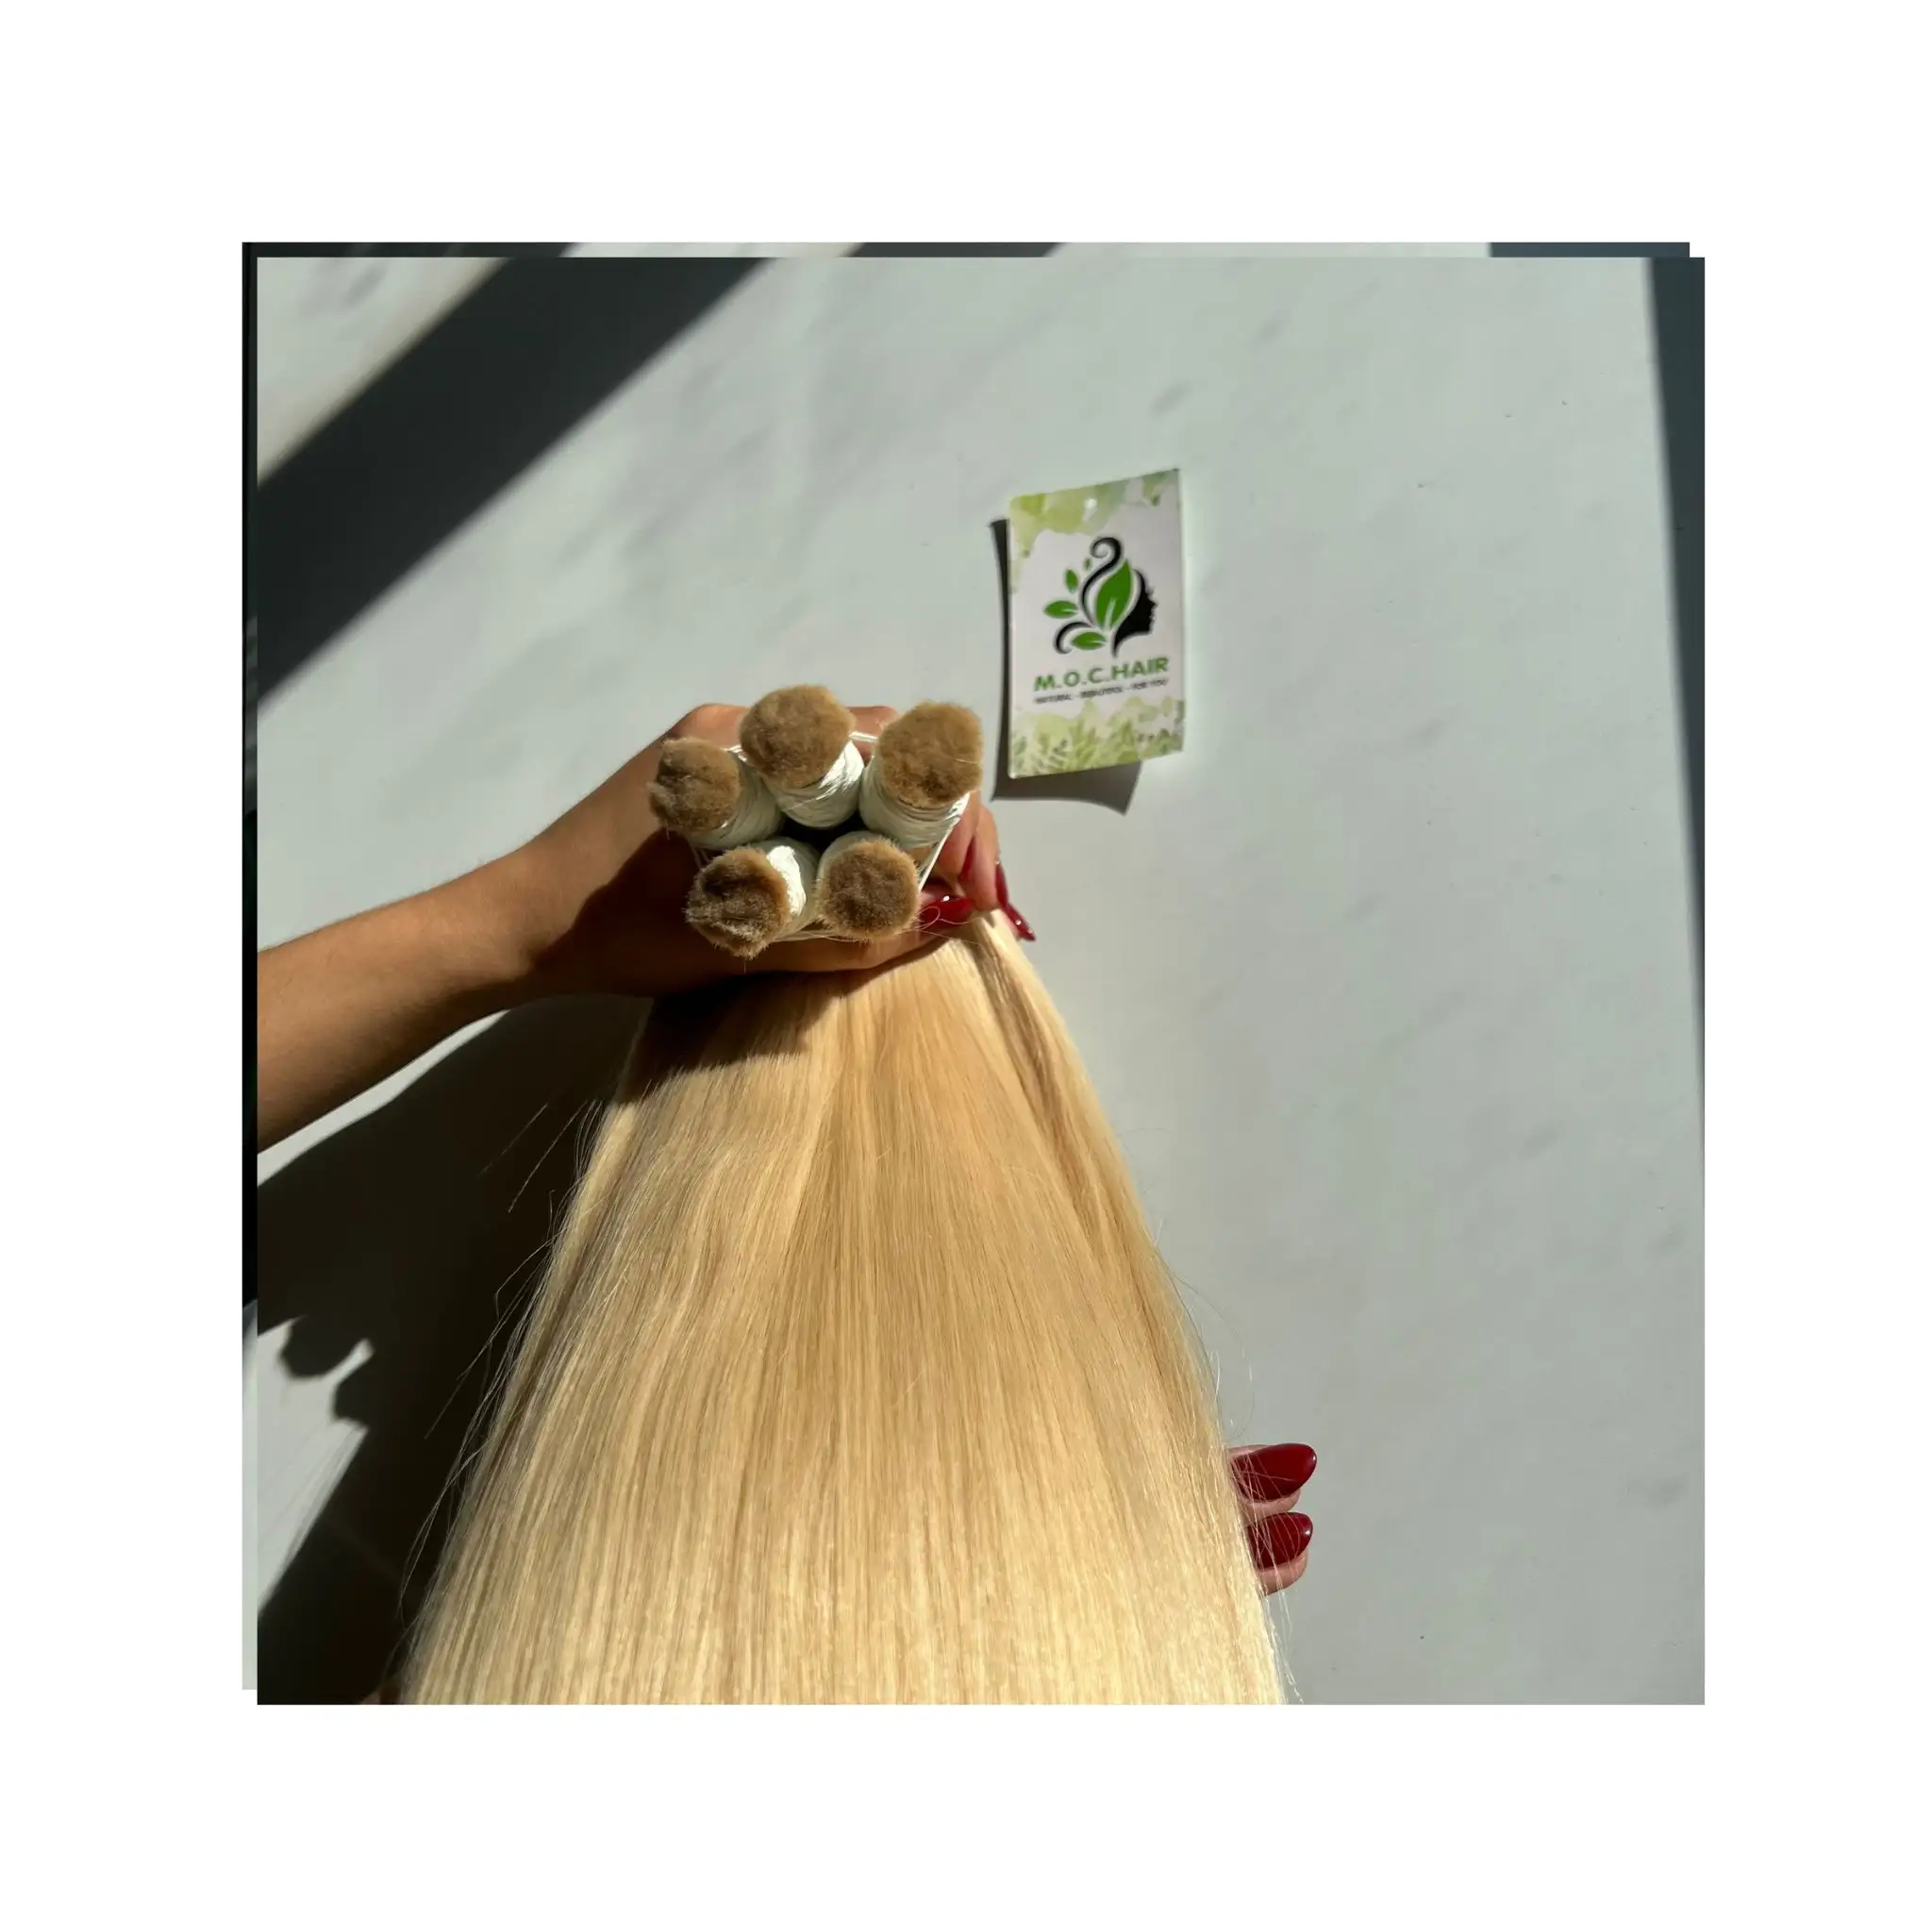 Remy Bulk Hair Extension the length 8 to 28 inches remy hair bundles raw virgin human free sample brazilian High Quality hair